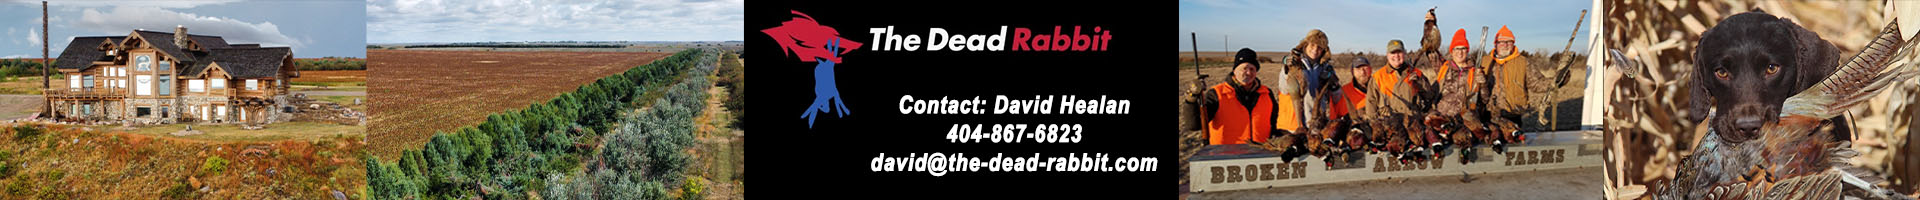 Dead Rabbit Ad